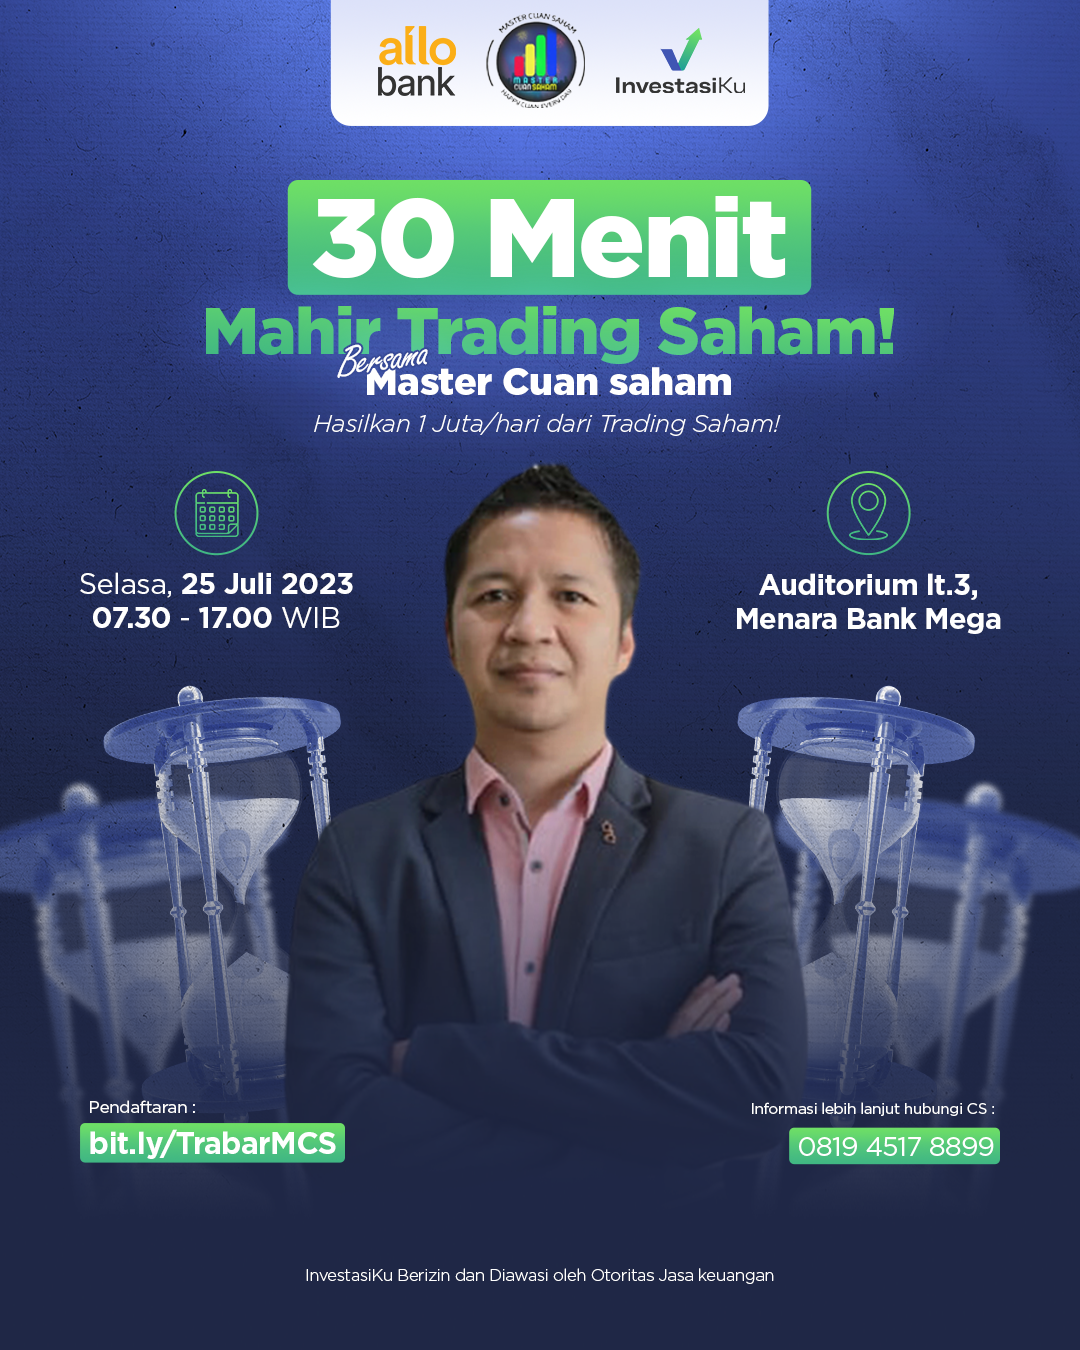 30 Menit Mahir Trading Saham Bersama Master Cuan Saham